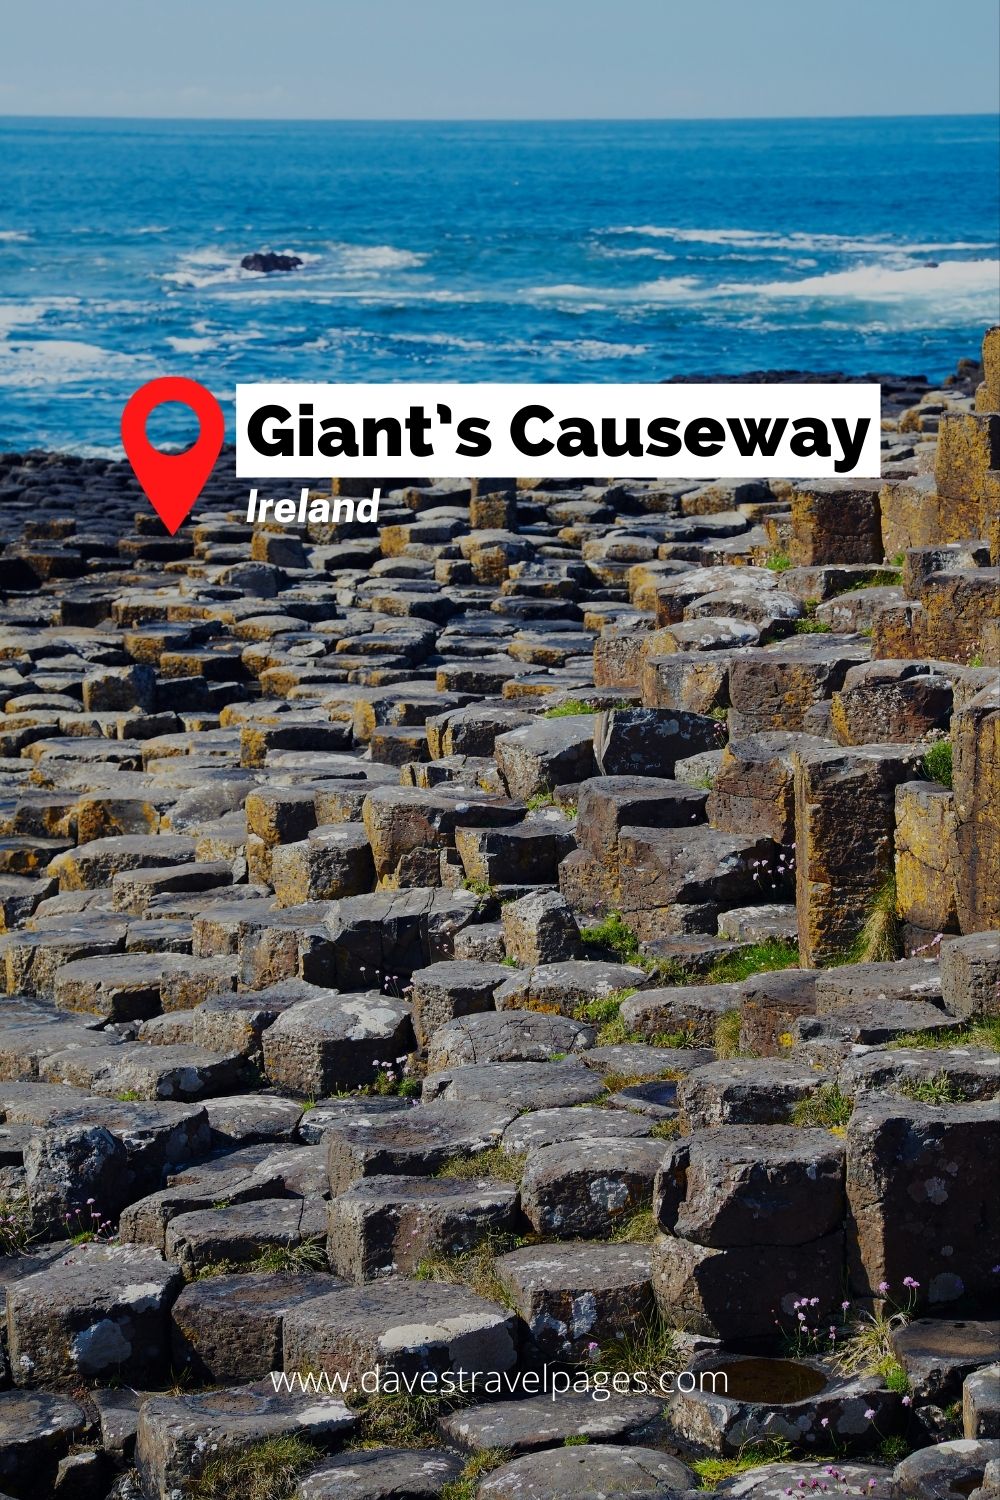 Giant’s Causeway - Ireland